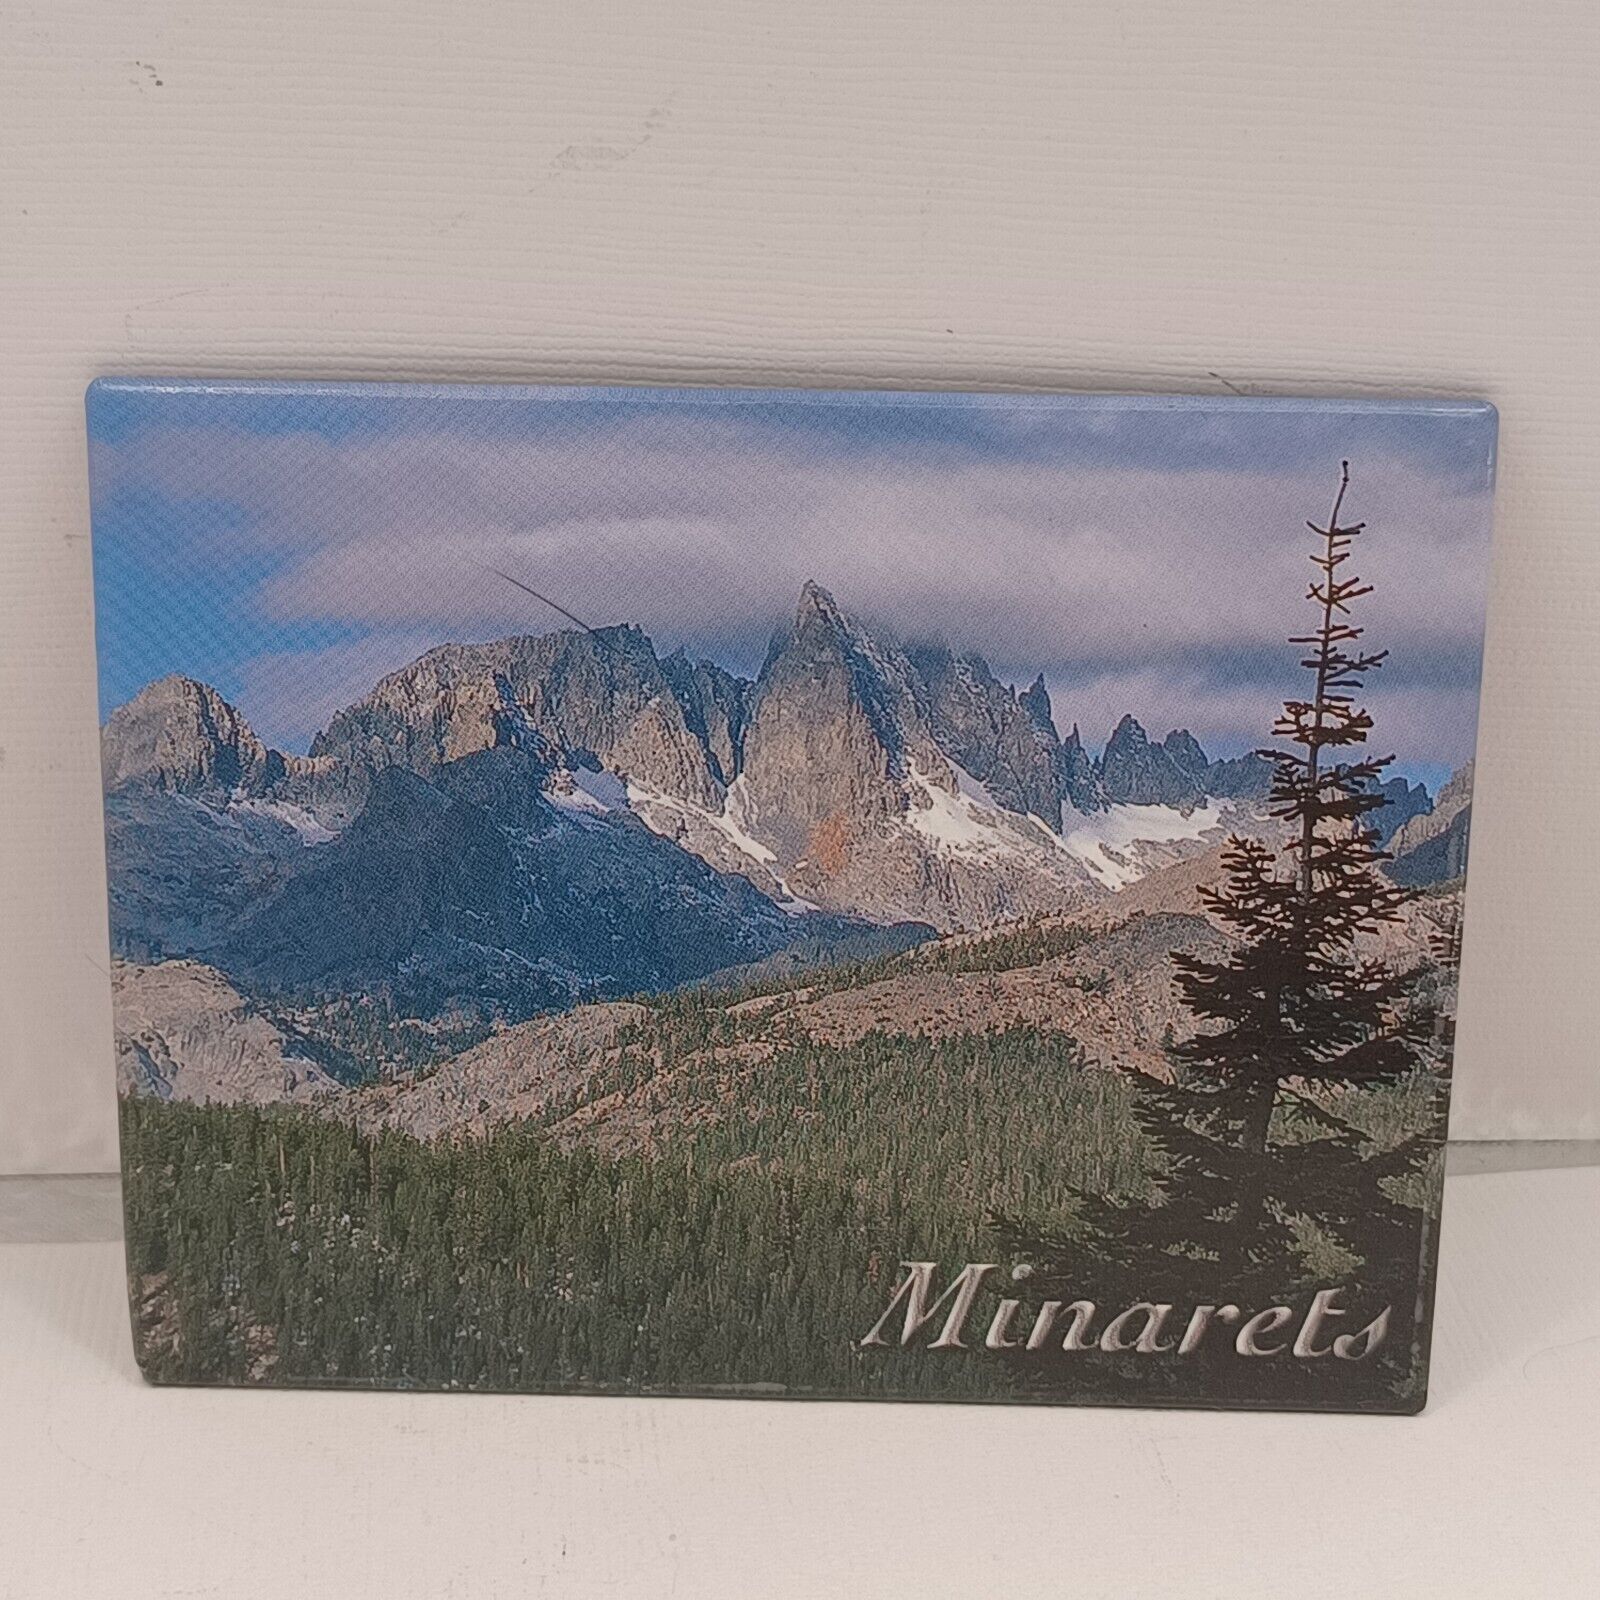 Minarets Peak California Scenic Refrigerator Magnet Souvenir Collectible